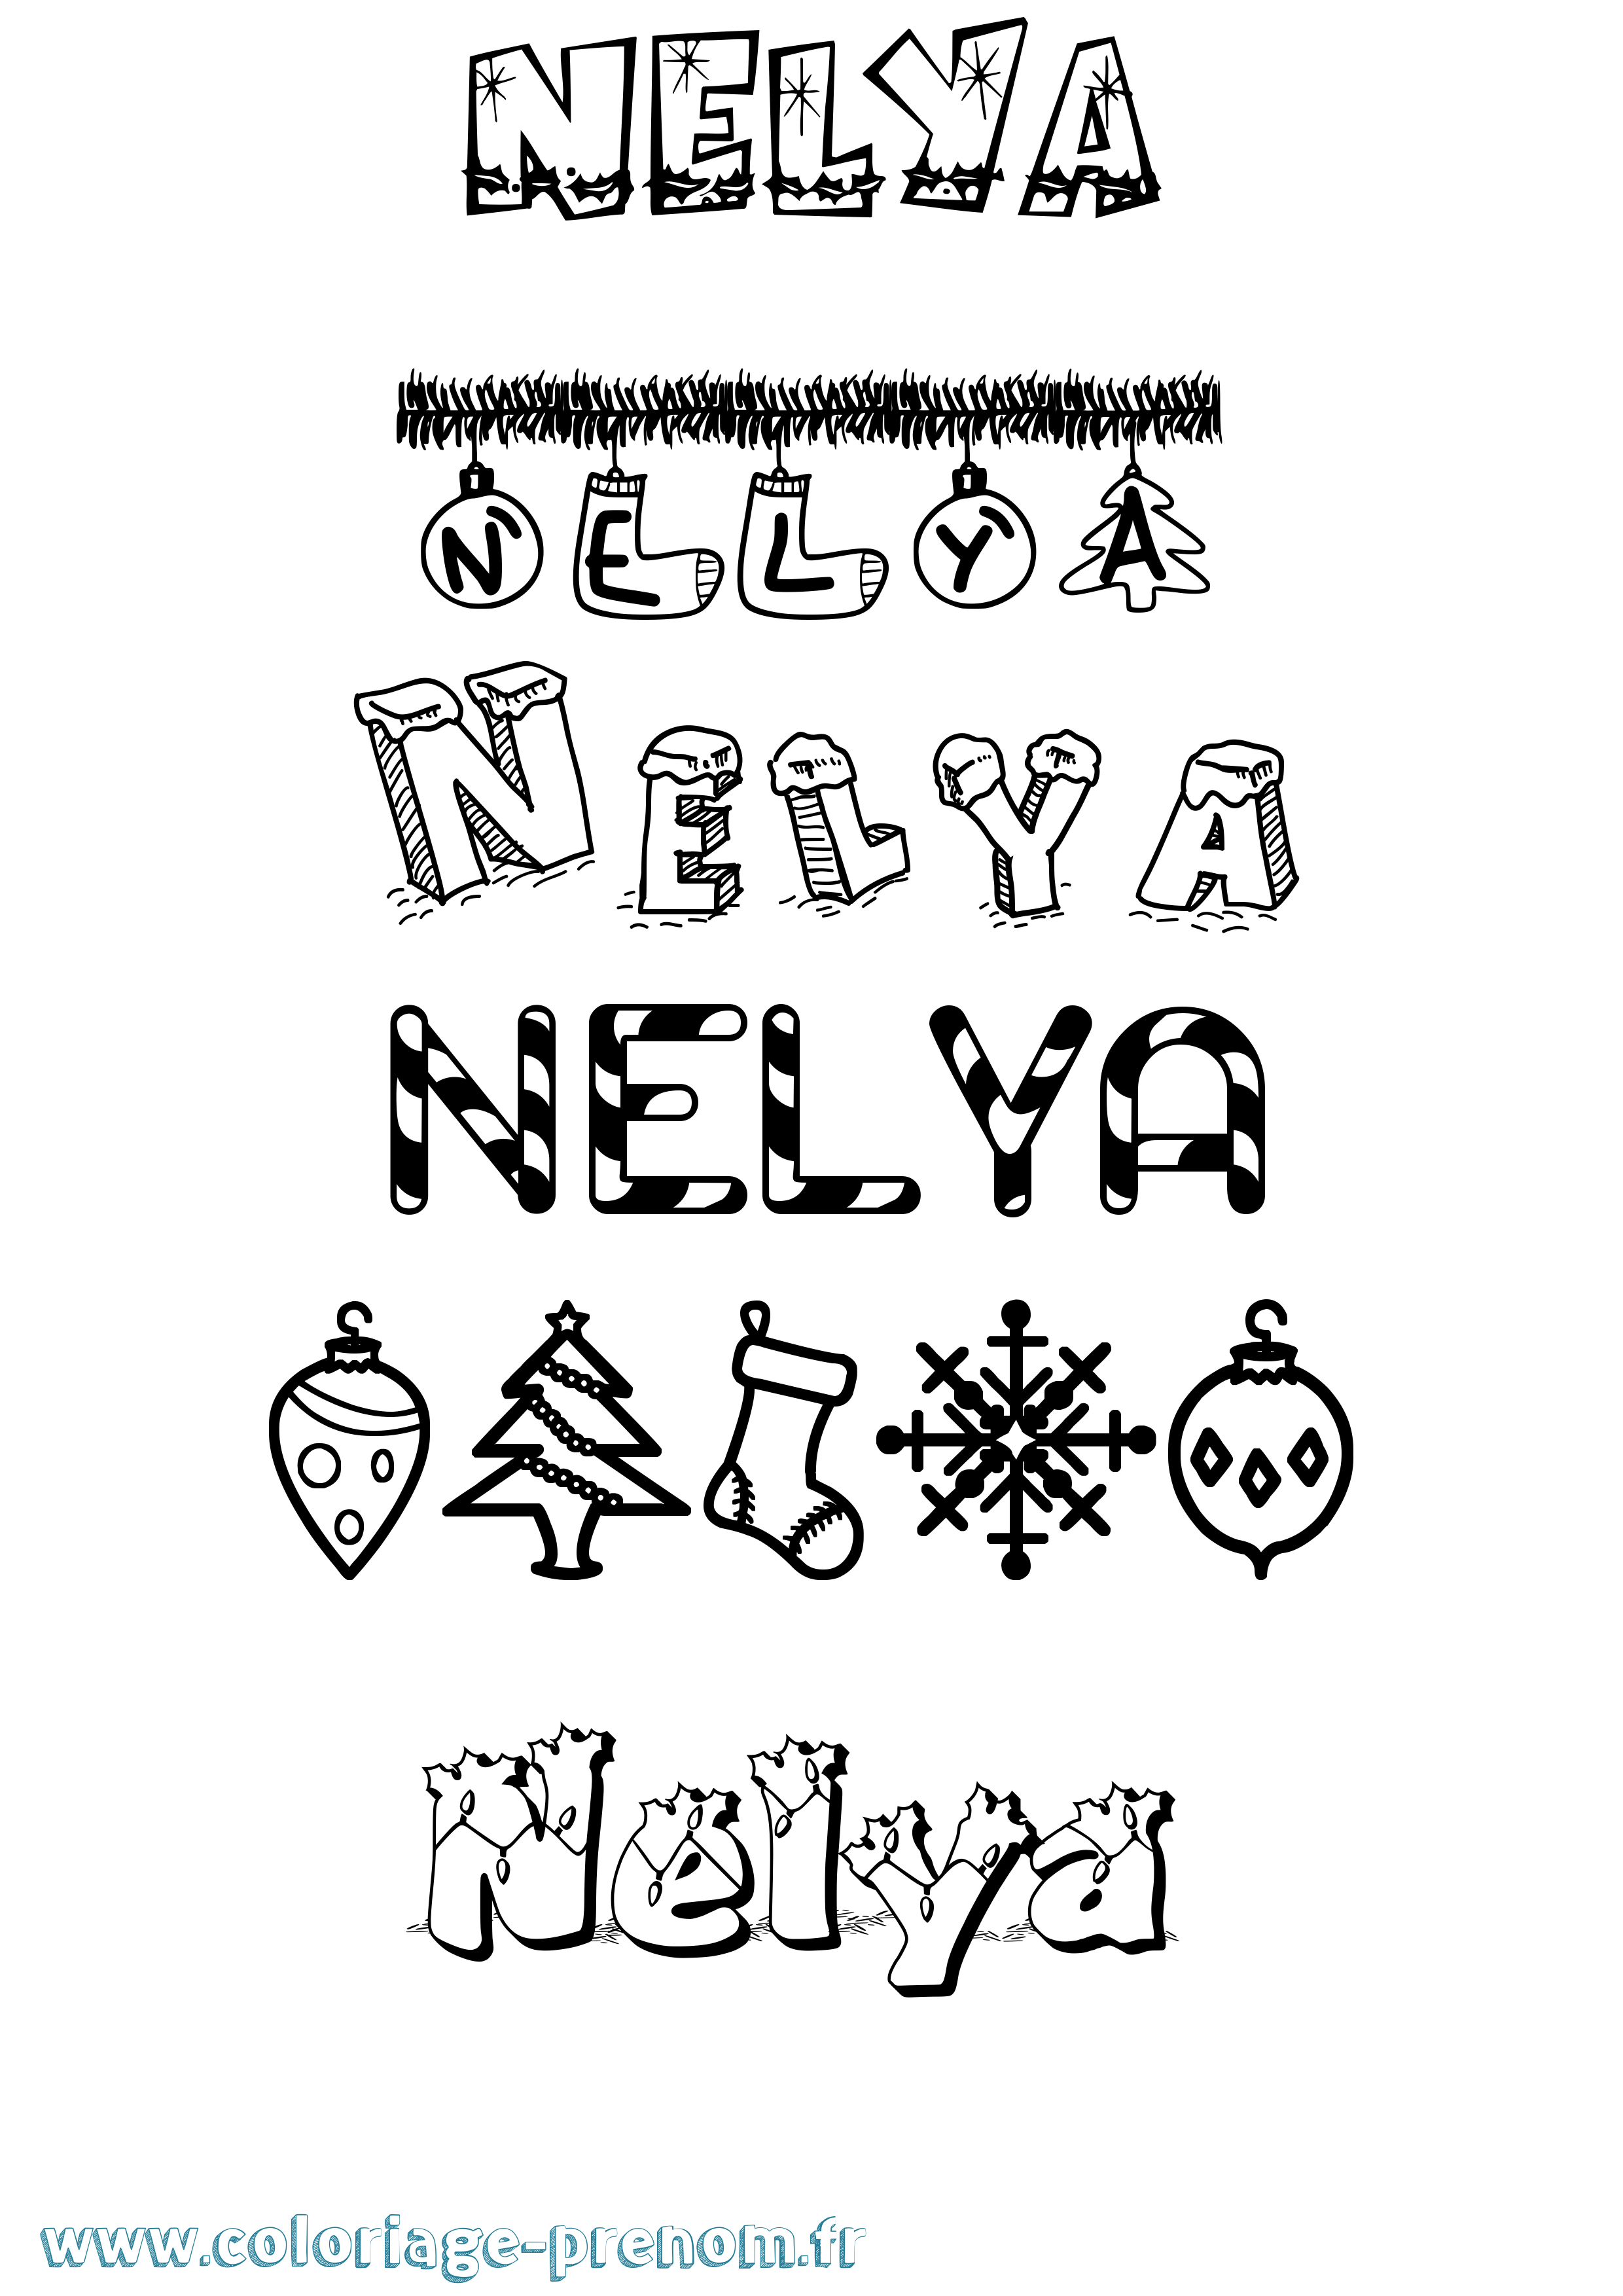 Coloriage prénom Nelya